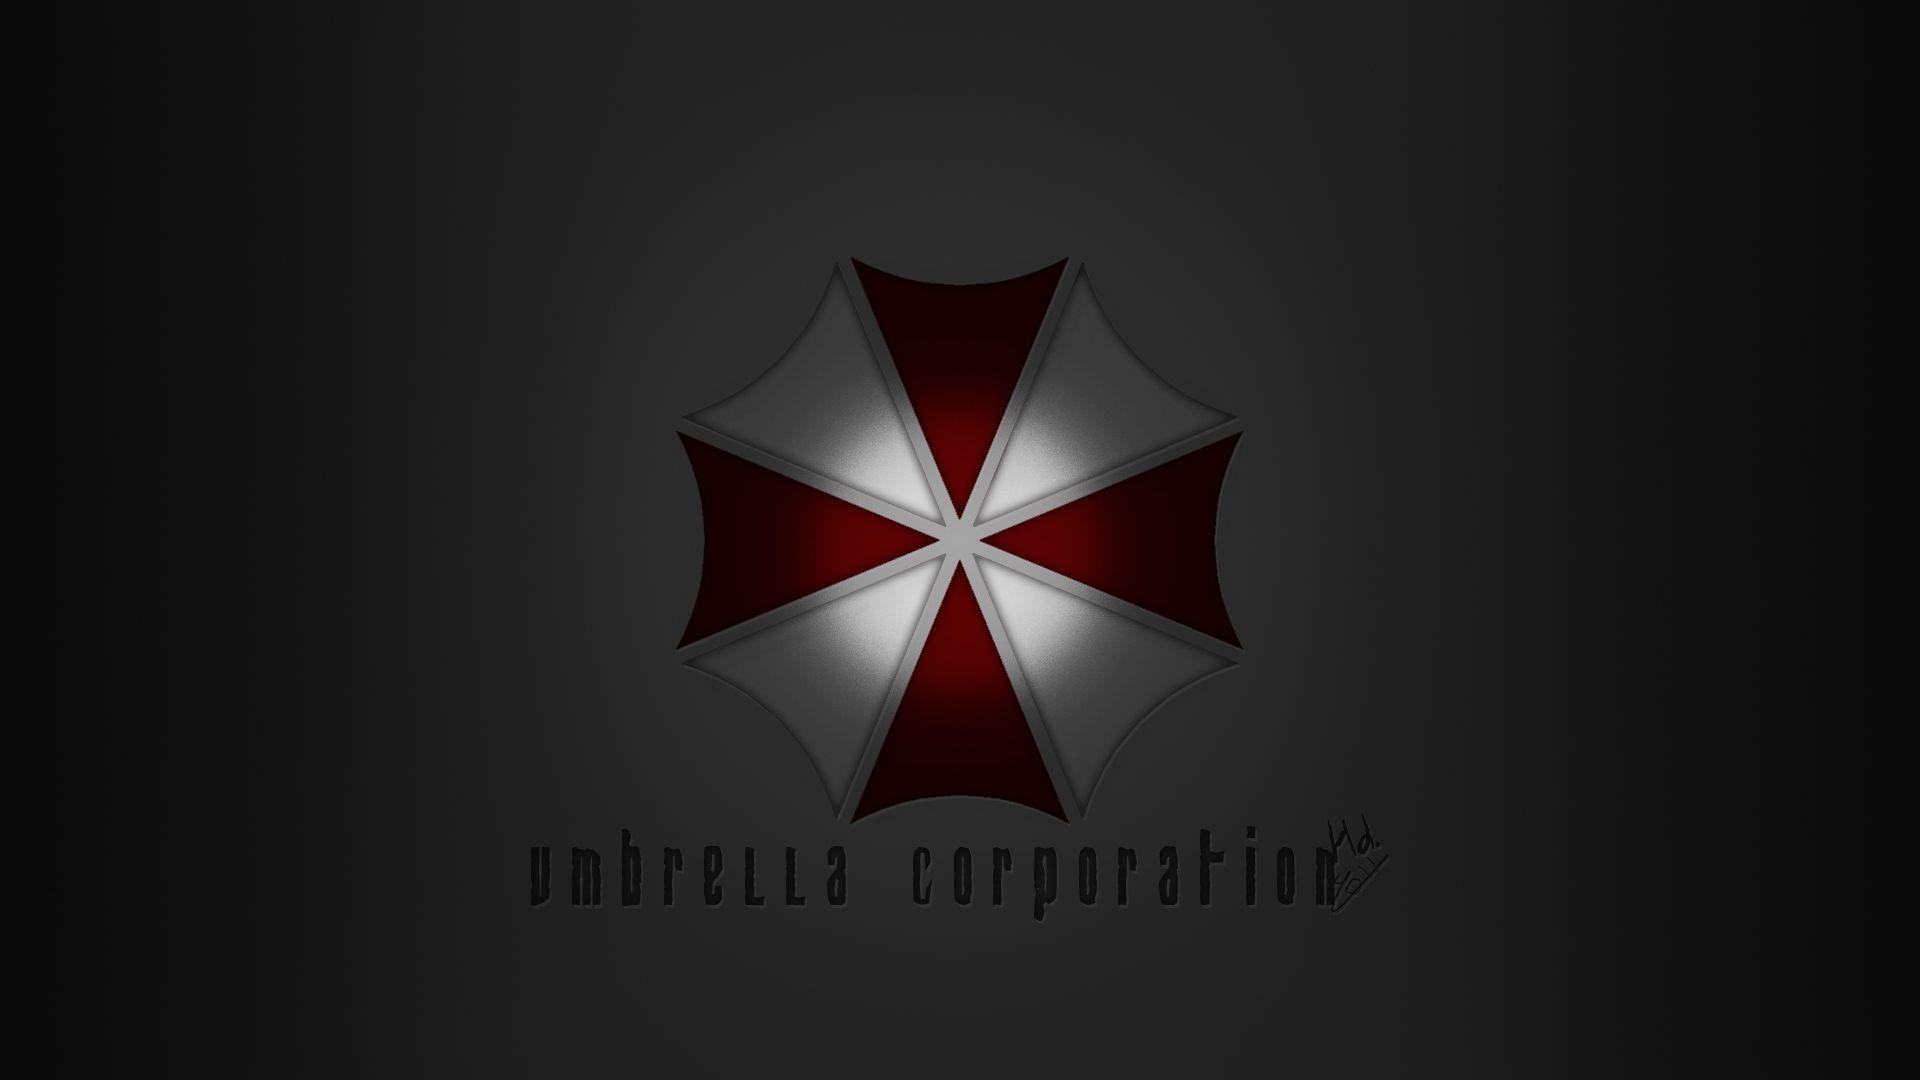 76 Umbrella Corporation Wallpaper  WallpaperSafari